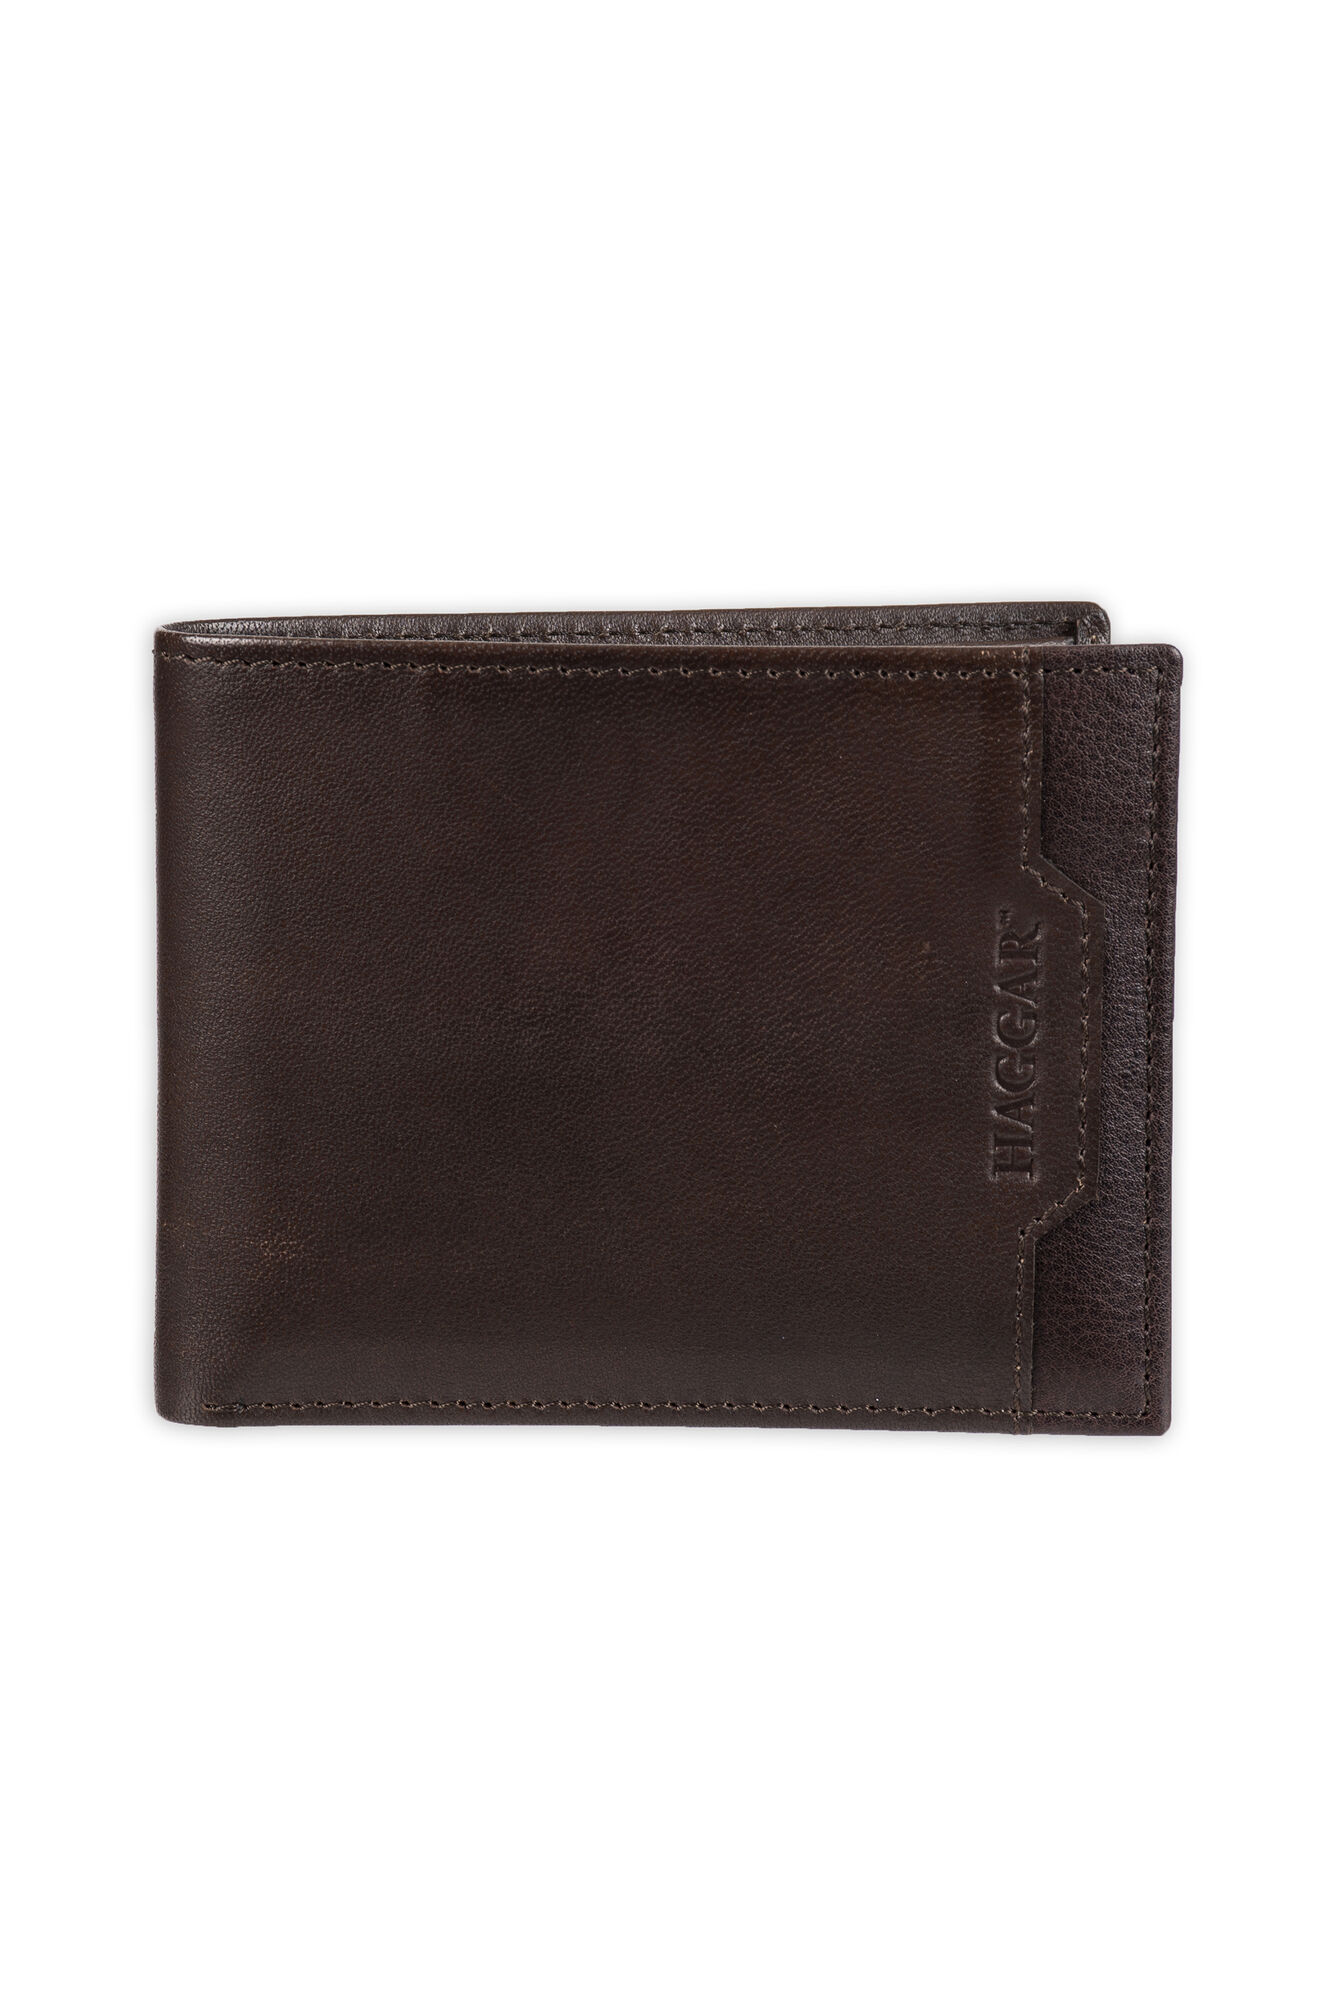 Haggar Coleshire Pocketmate Wallet Brown (31HH140001) photo